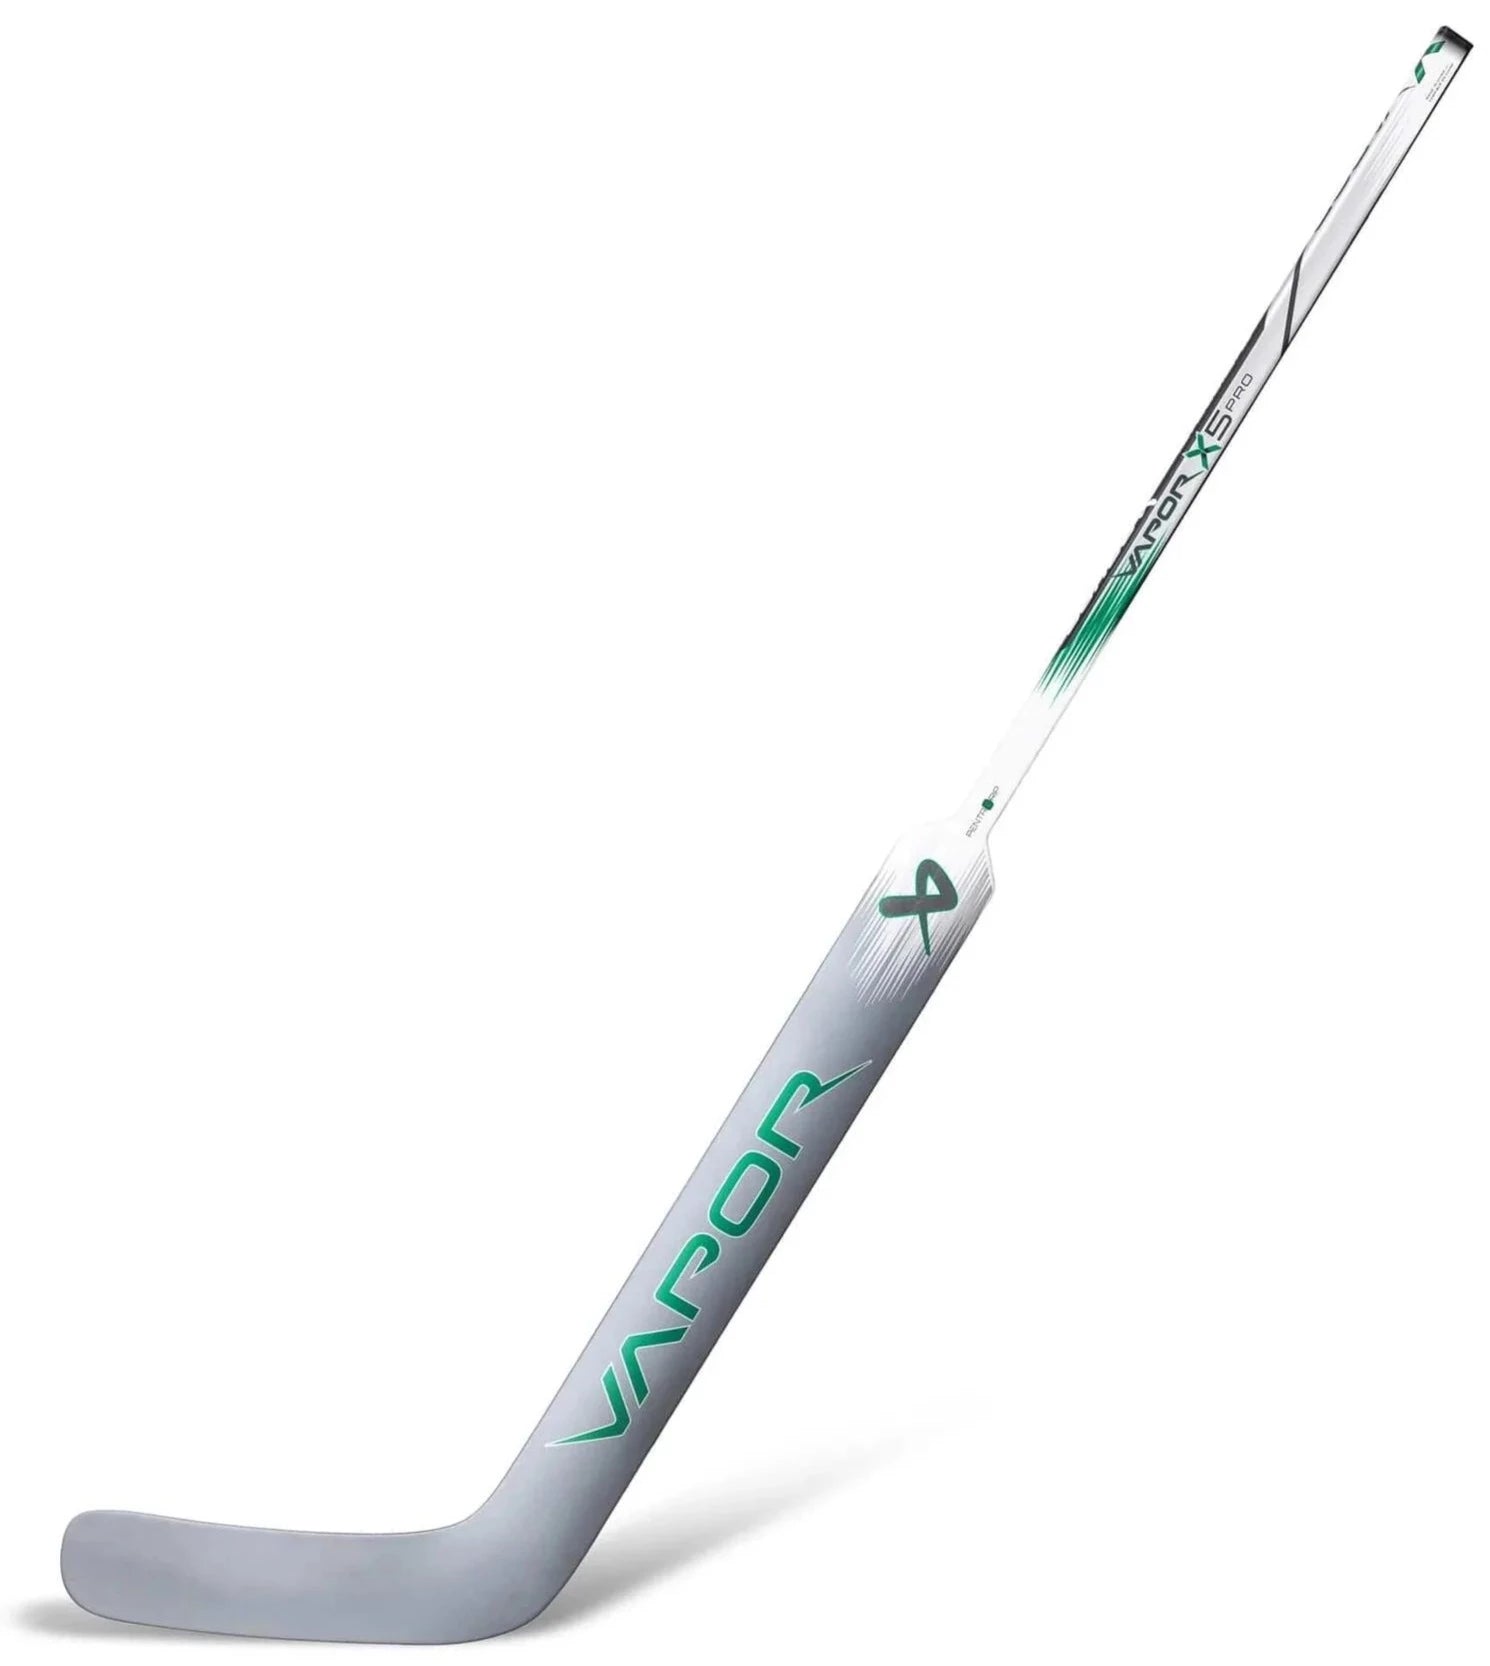 Bauer Vapor X5 Pro Intermediate Goalie Stick (Limited Edition)